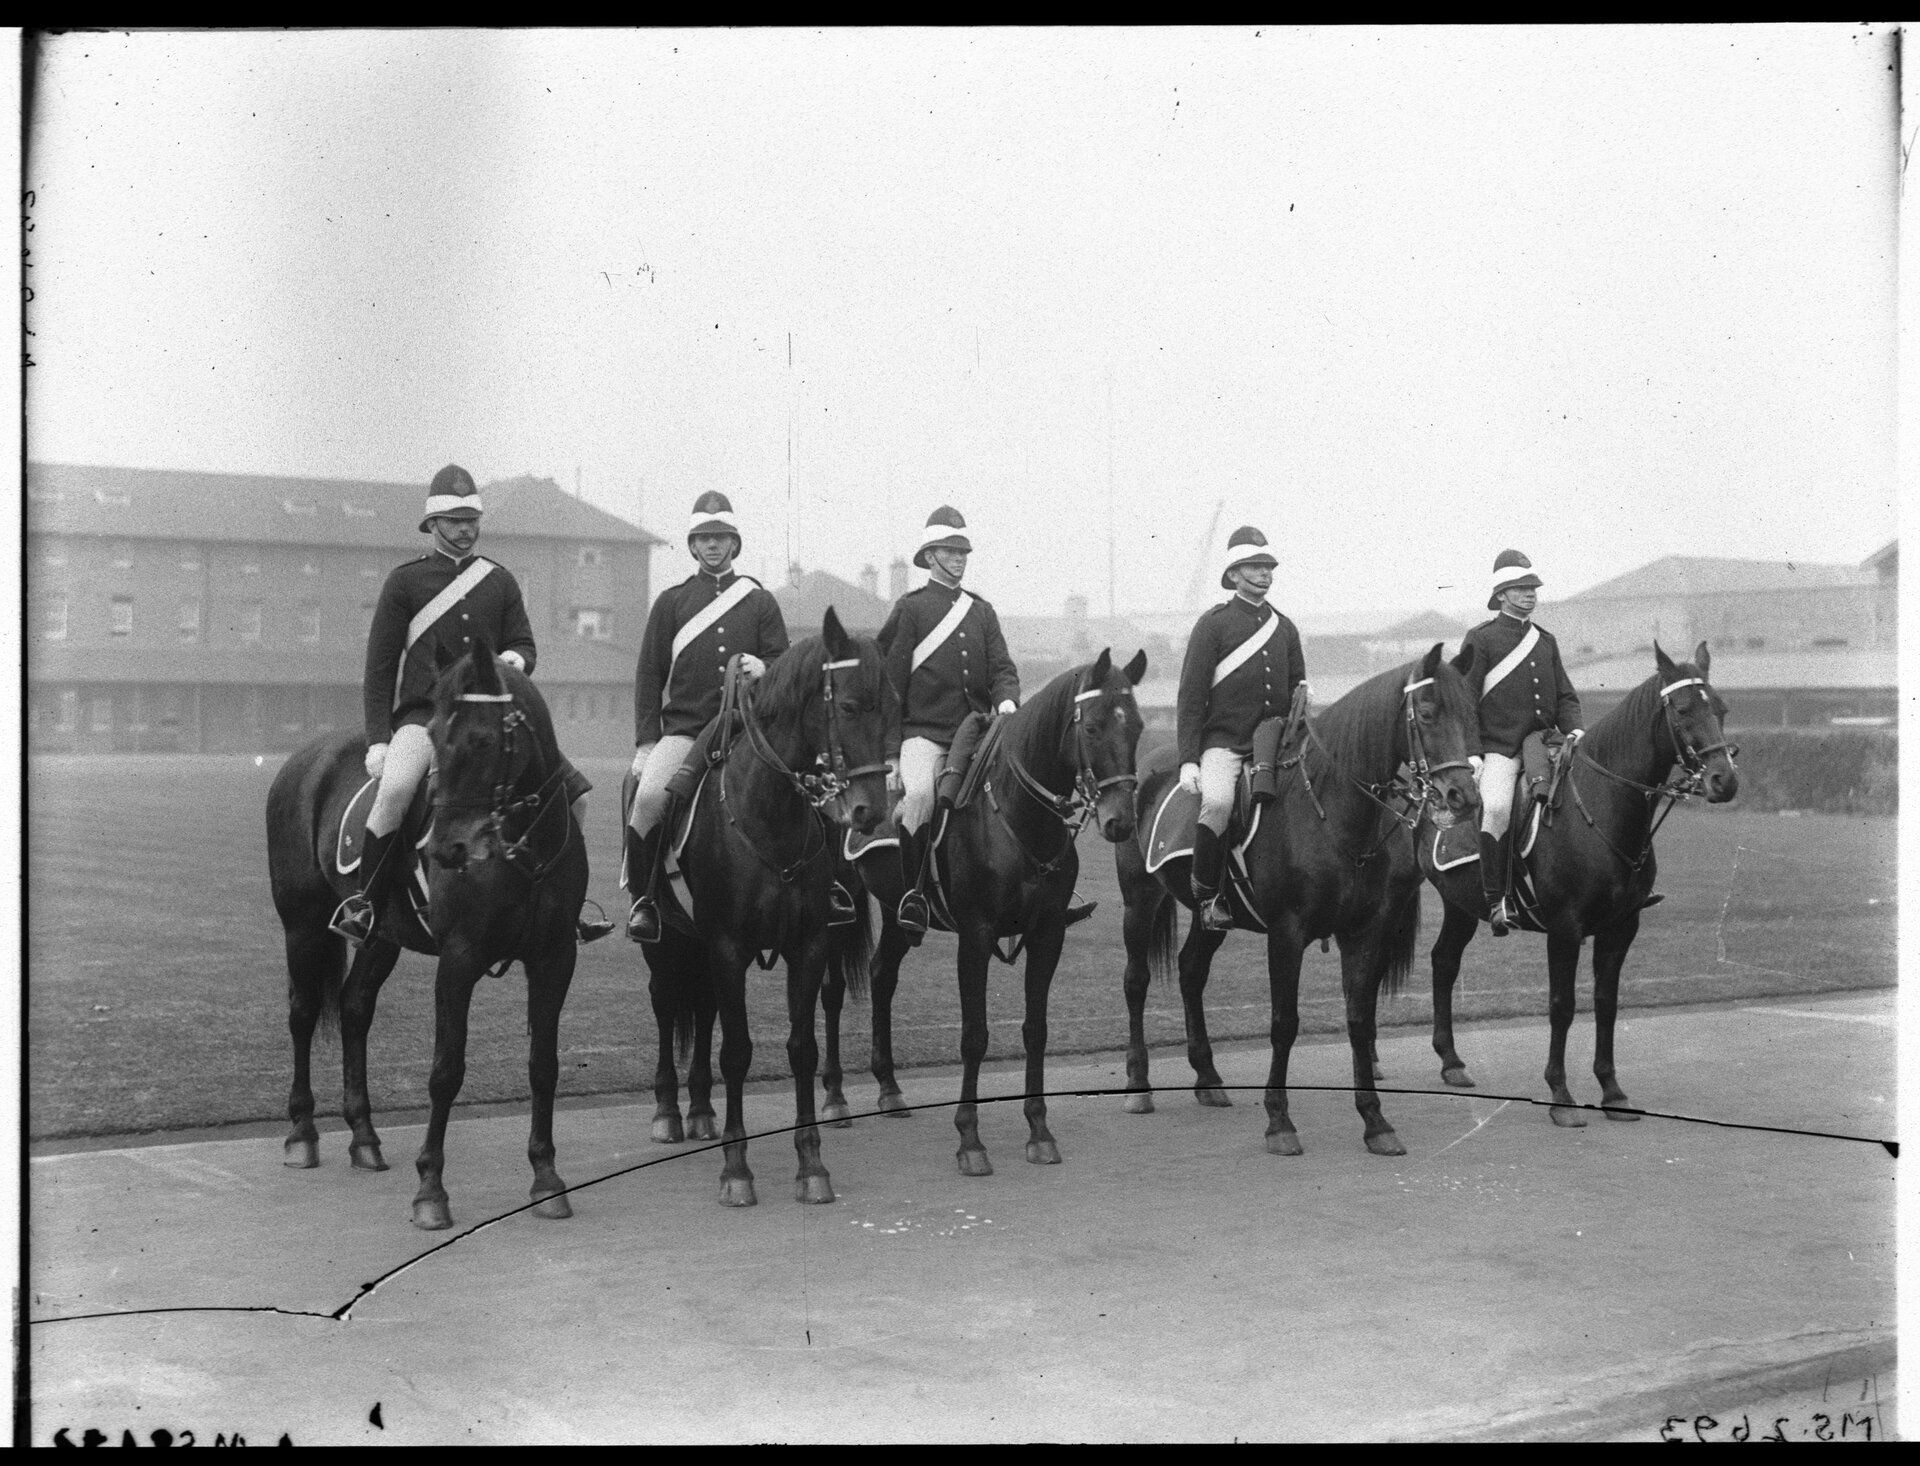 Five NSW Mounted Police on horseback